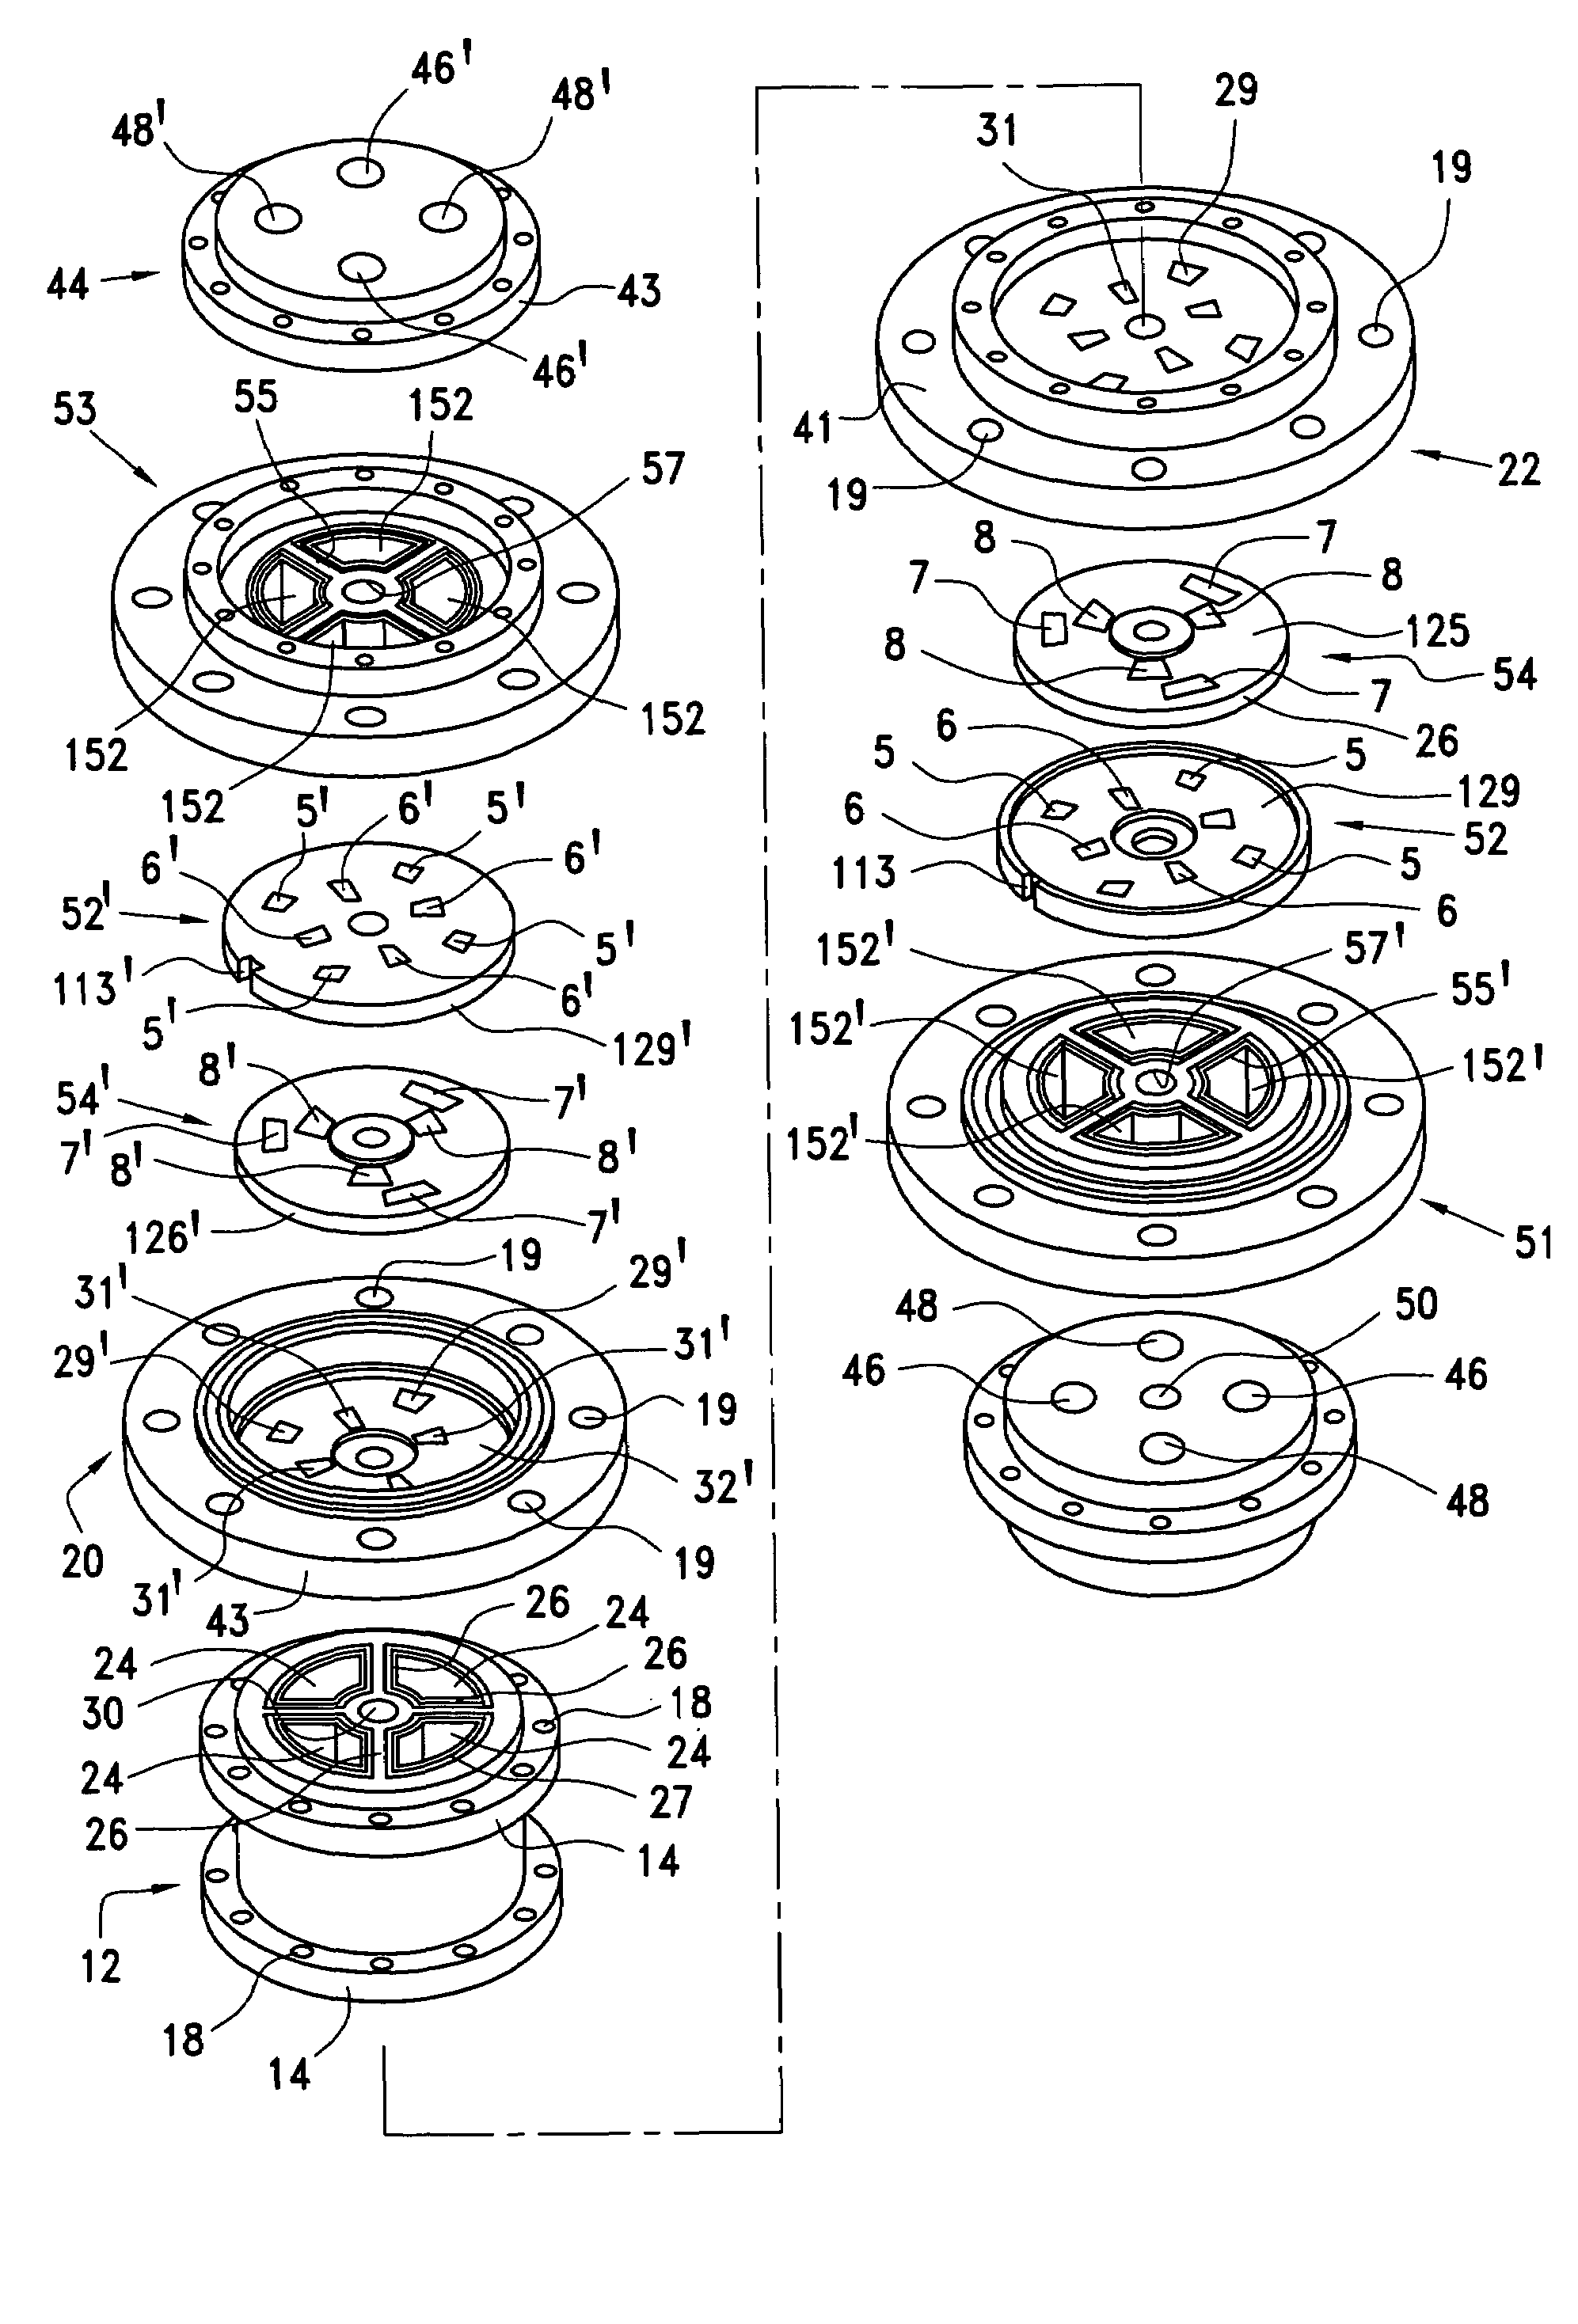 Pressure exchange apparatus